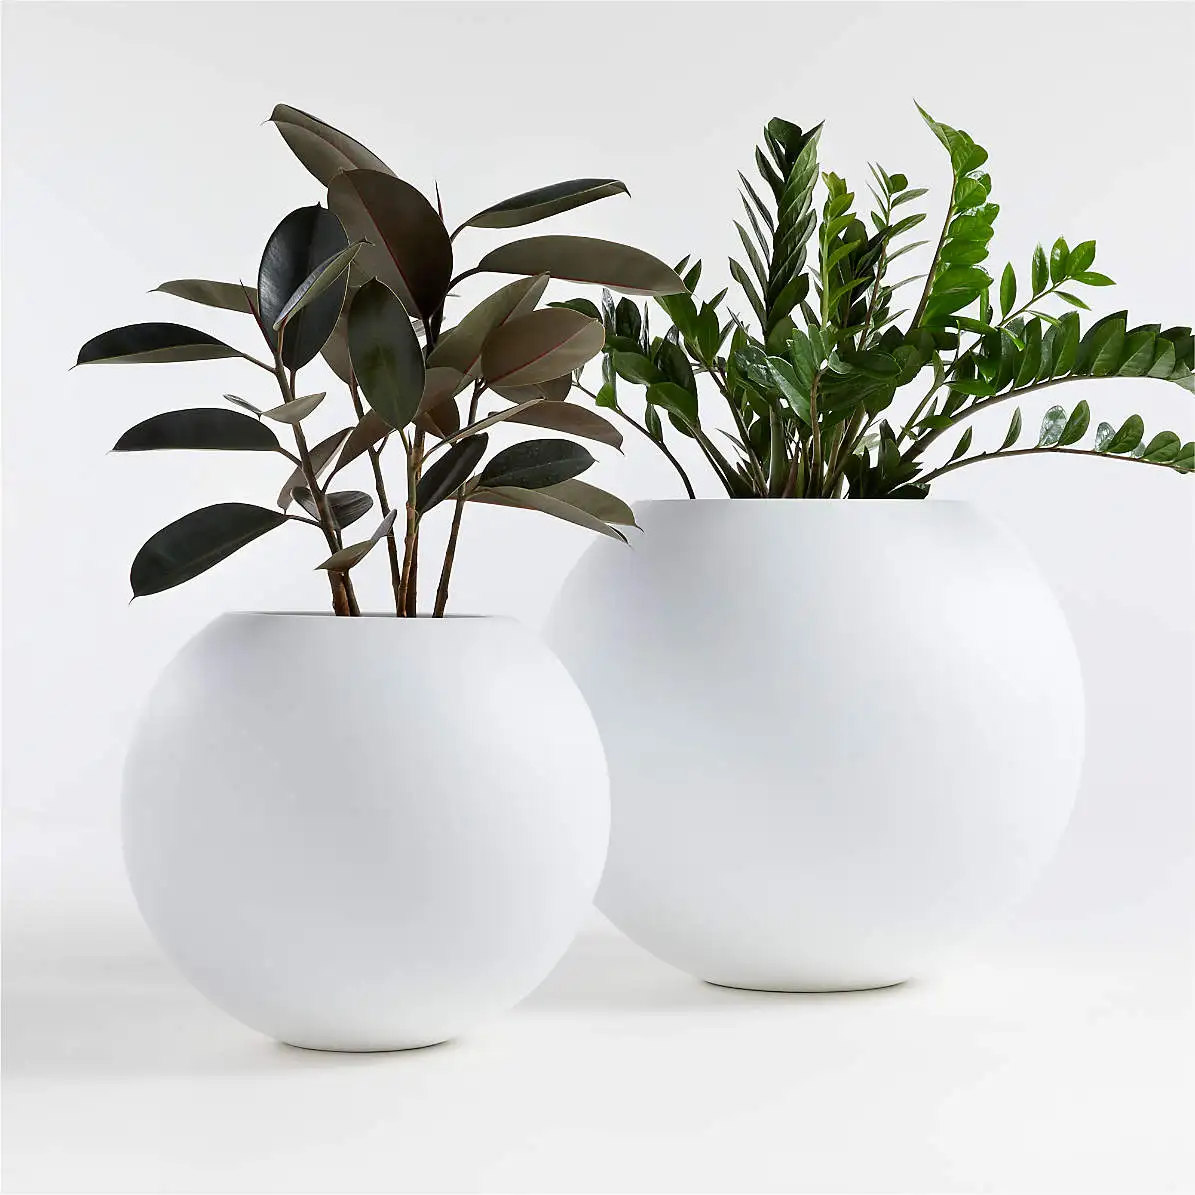 sphere-white-planters.jpg